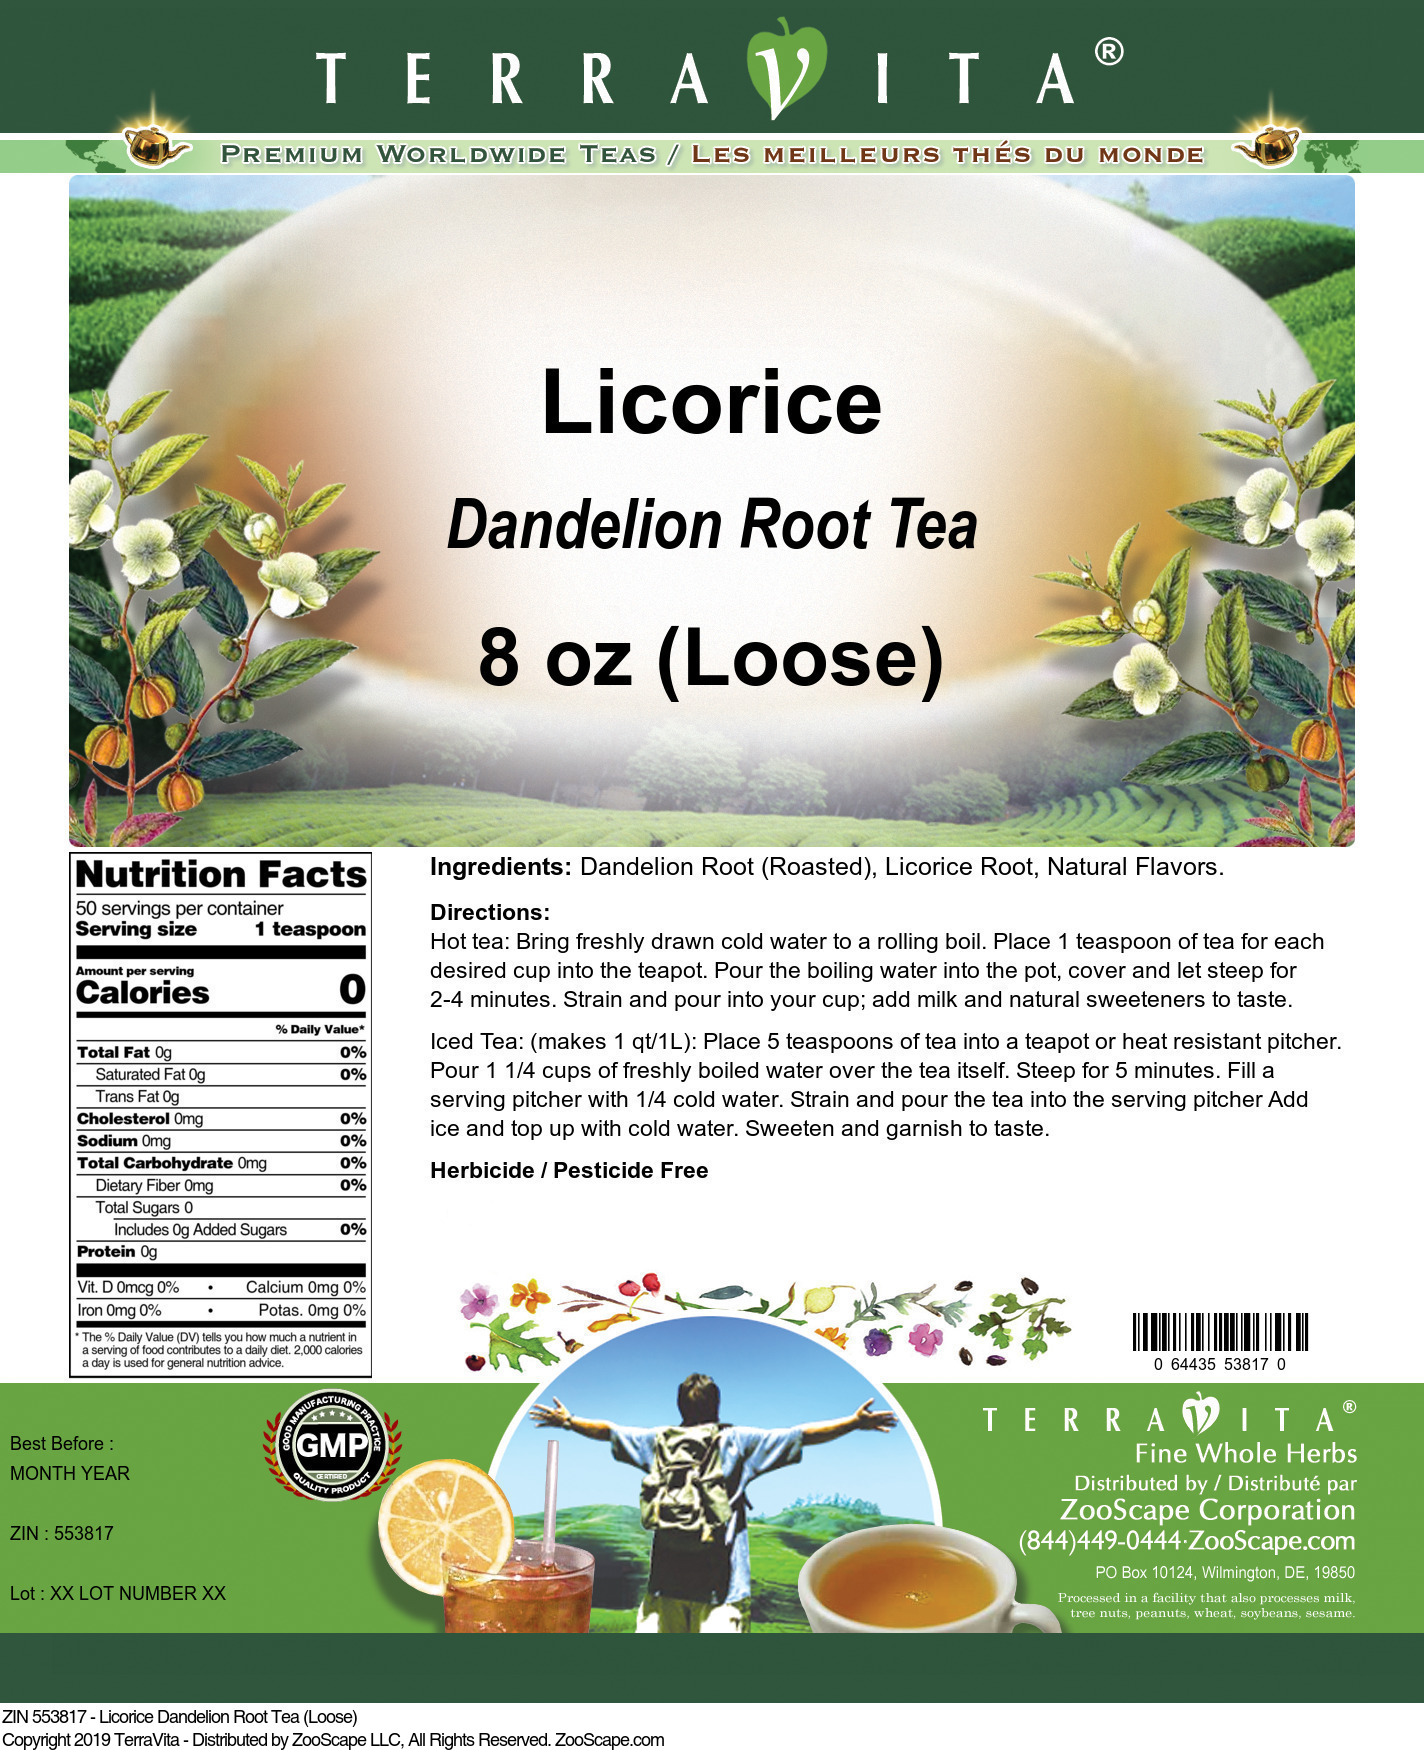 Licorice Dandelion Root Tea (Loose) - Label